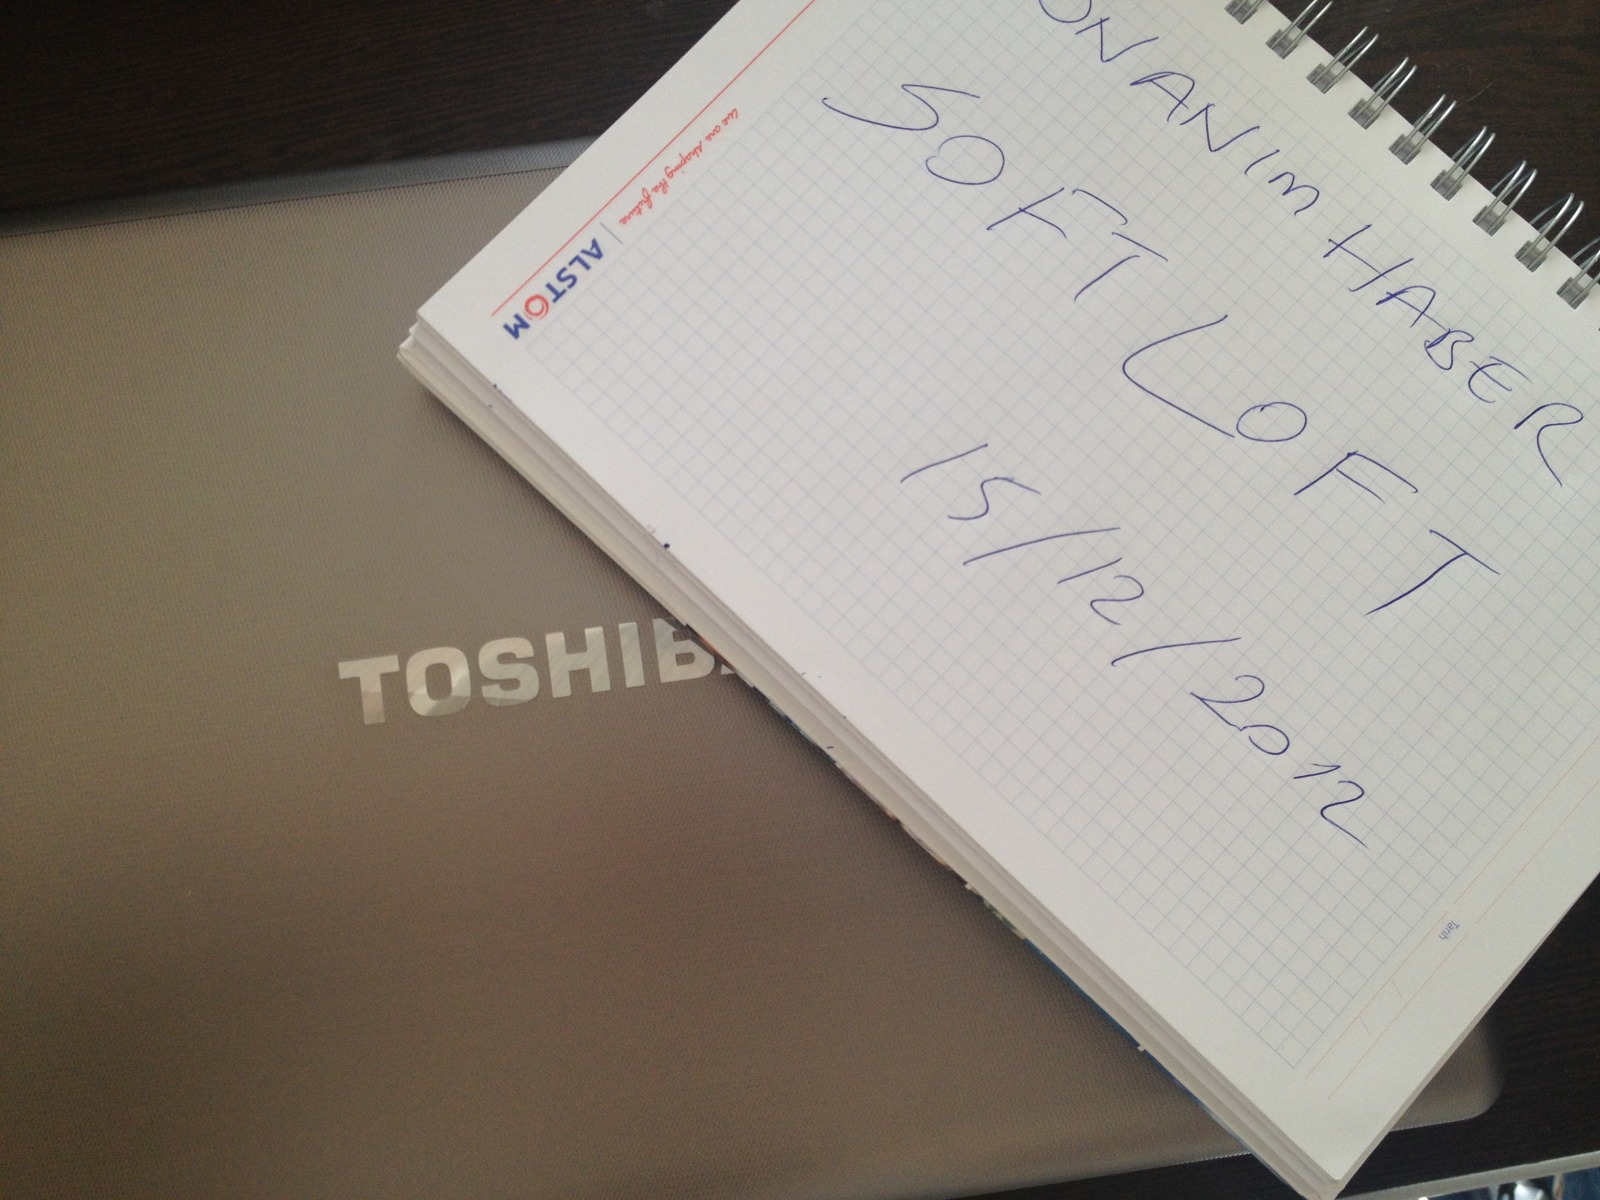  TOSHIBA 17.3' i7 İŞLEMCİ 8 GB RAM 750GB HDD